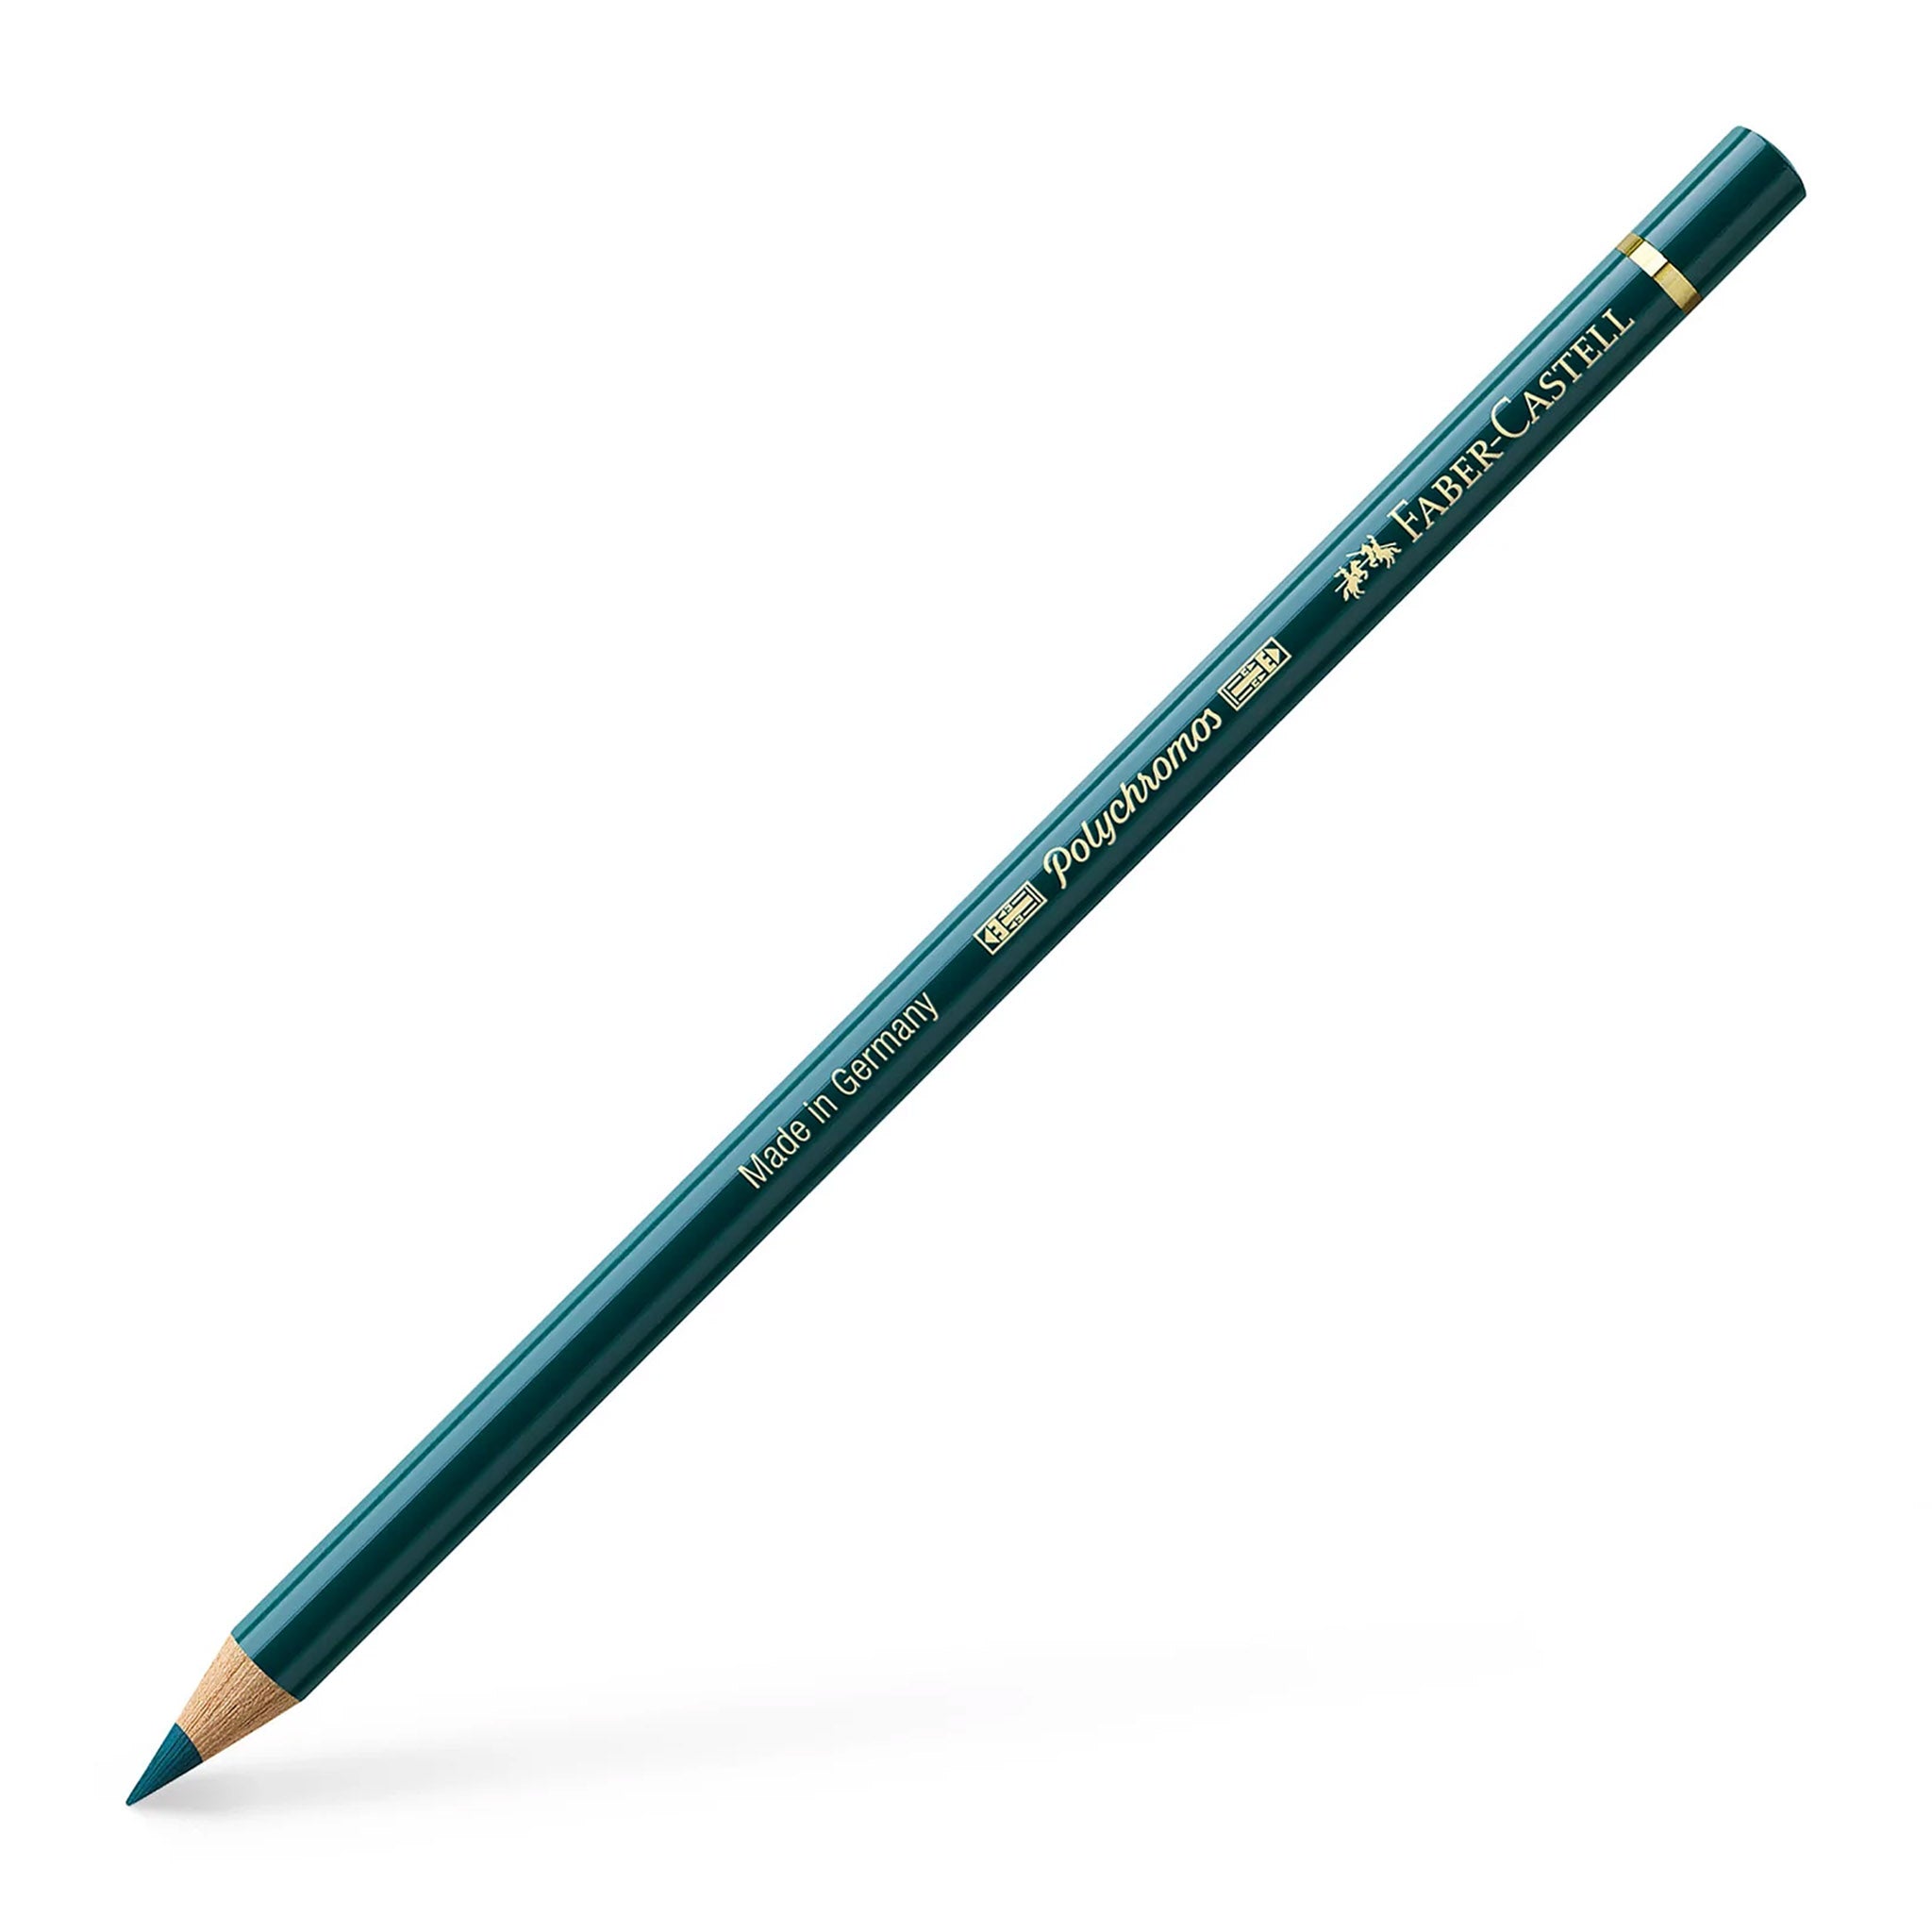 AMAZING Pencils! Faber-Castell Polychromos Colored Pencils Review